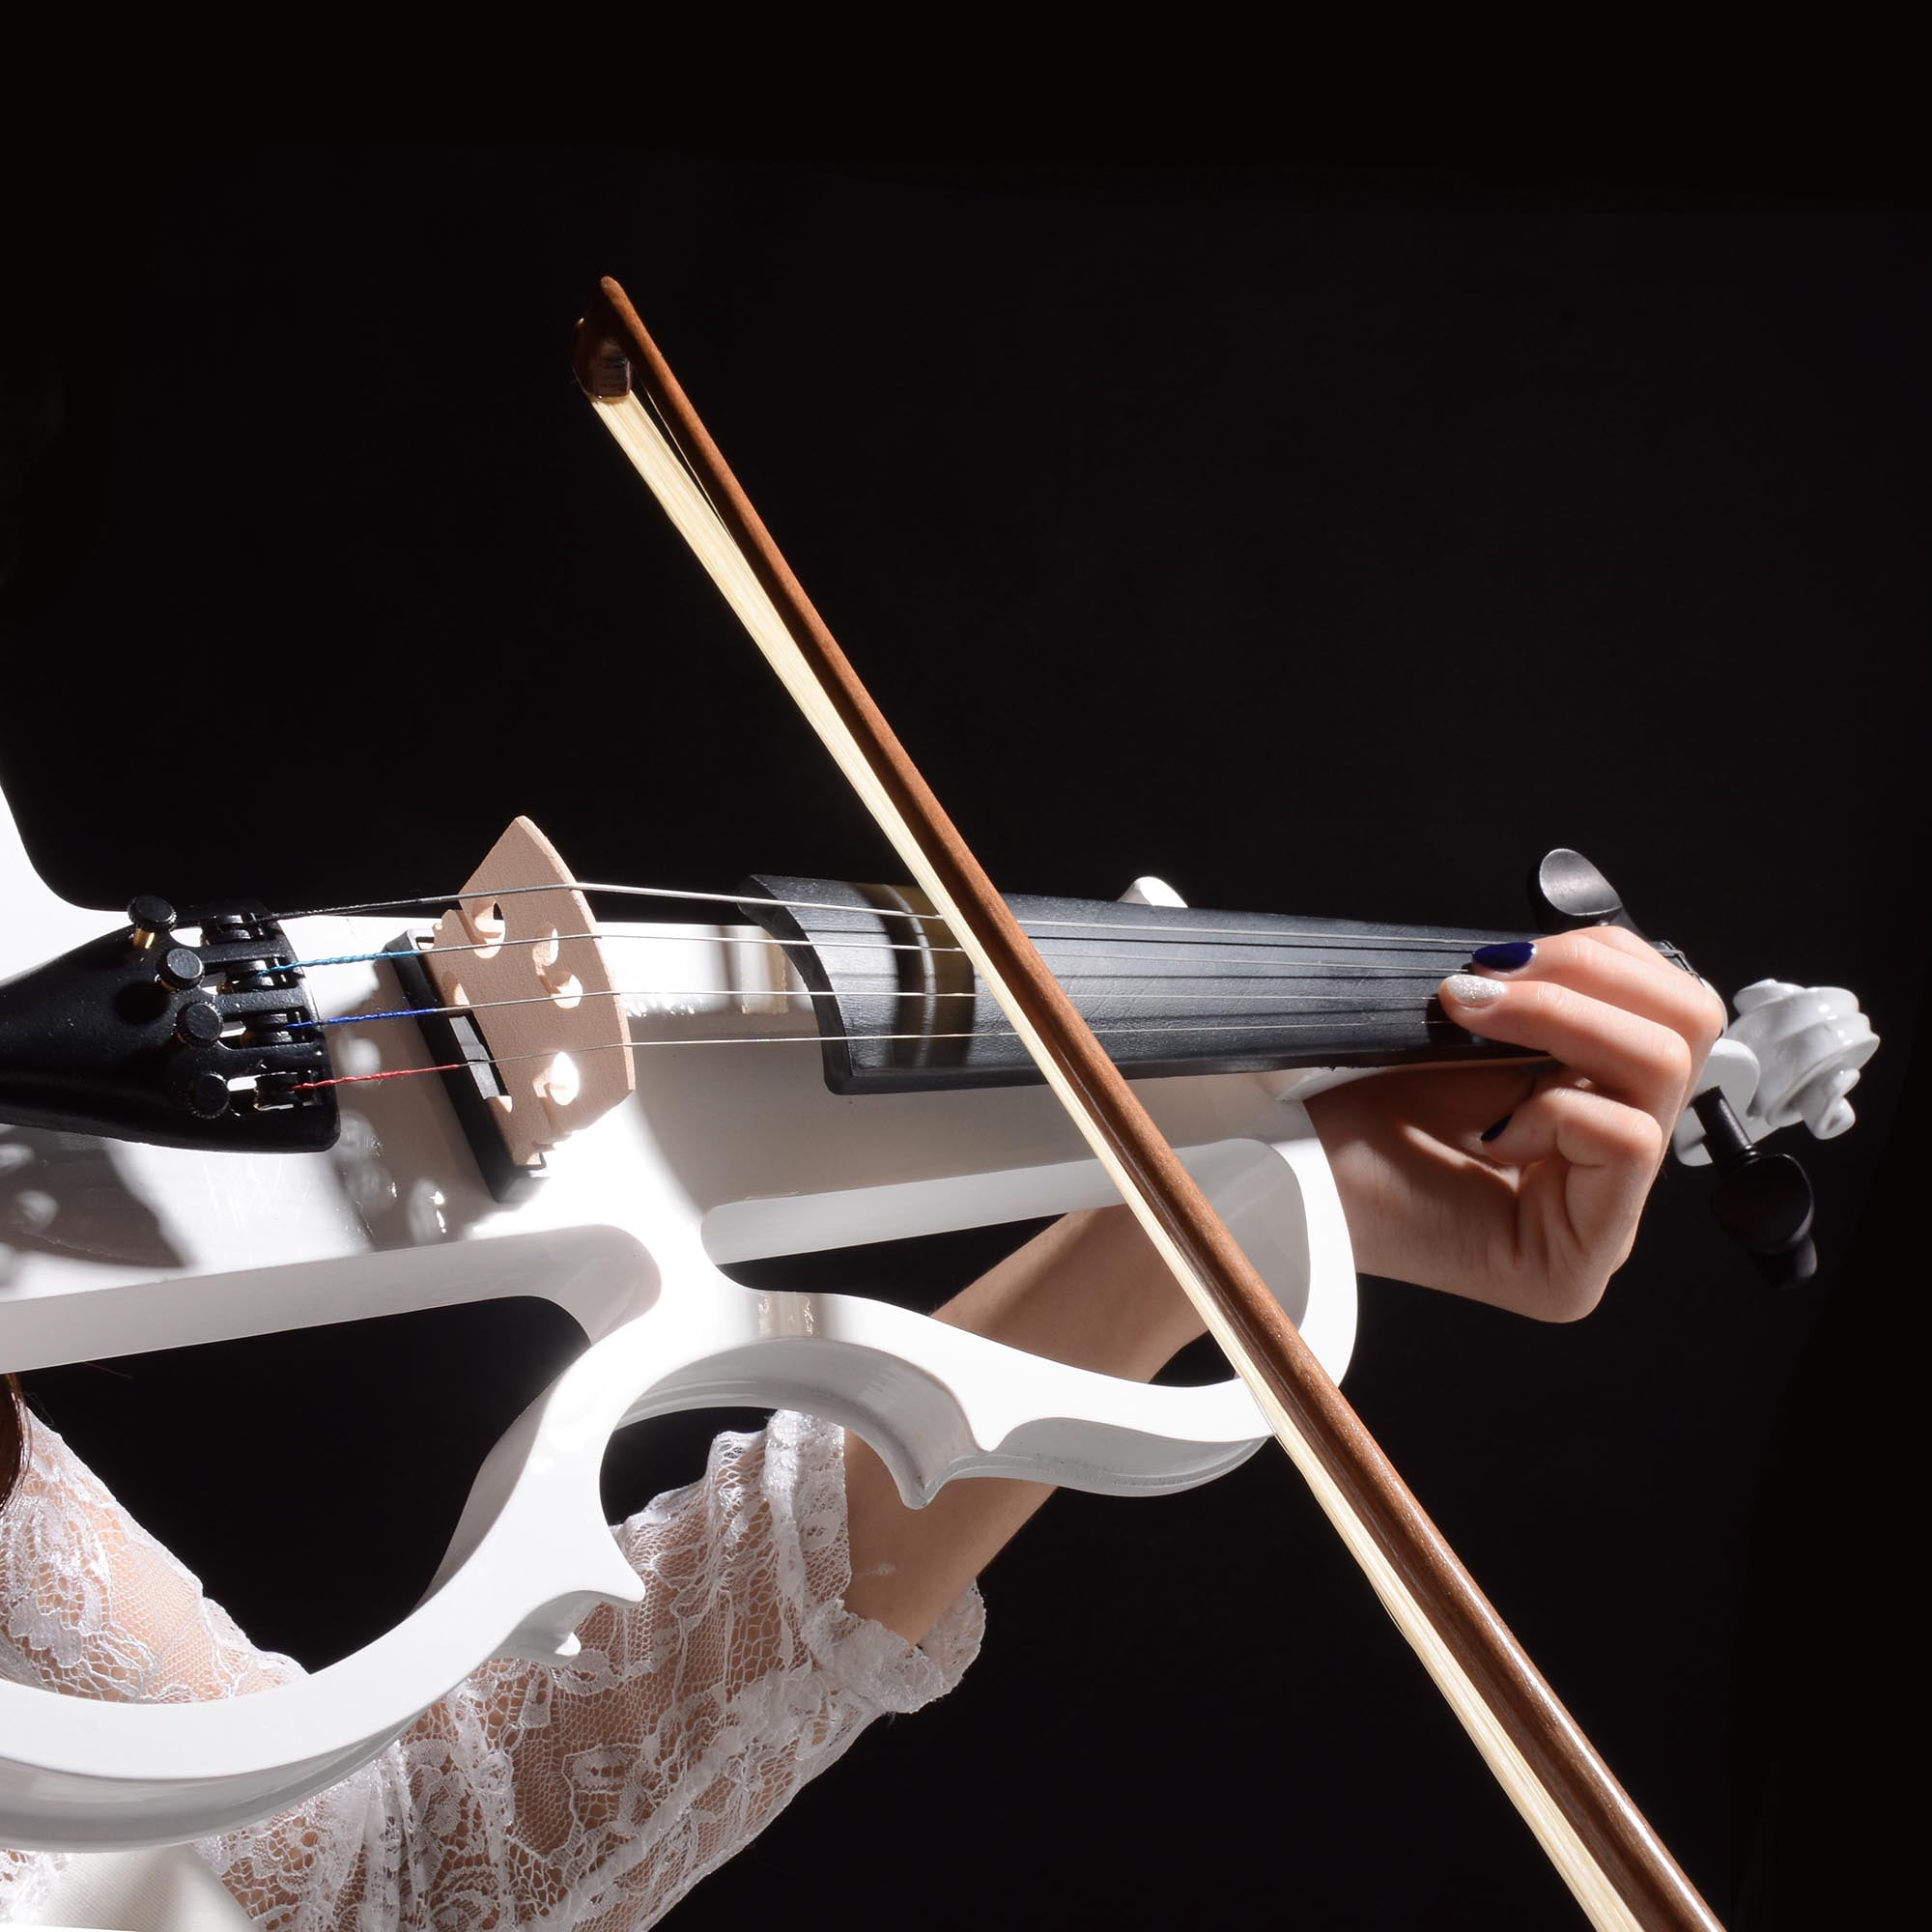 Silent Electric Violin 4/4 Sac de transport avec performance Professional  White